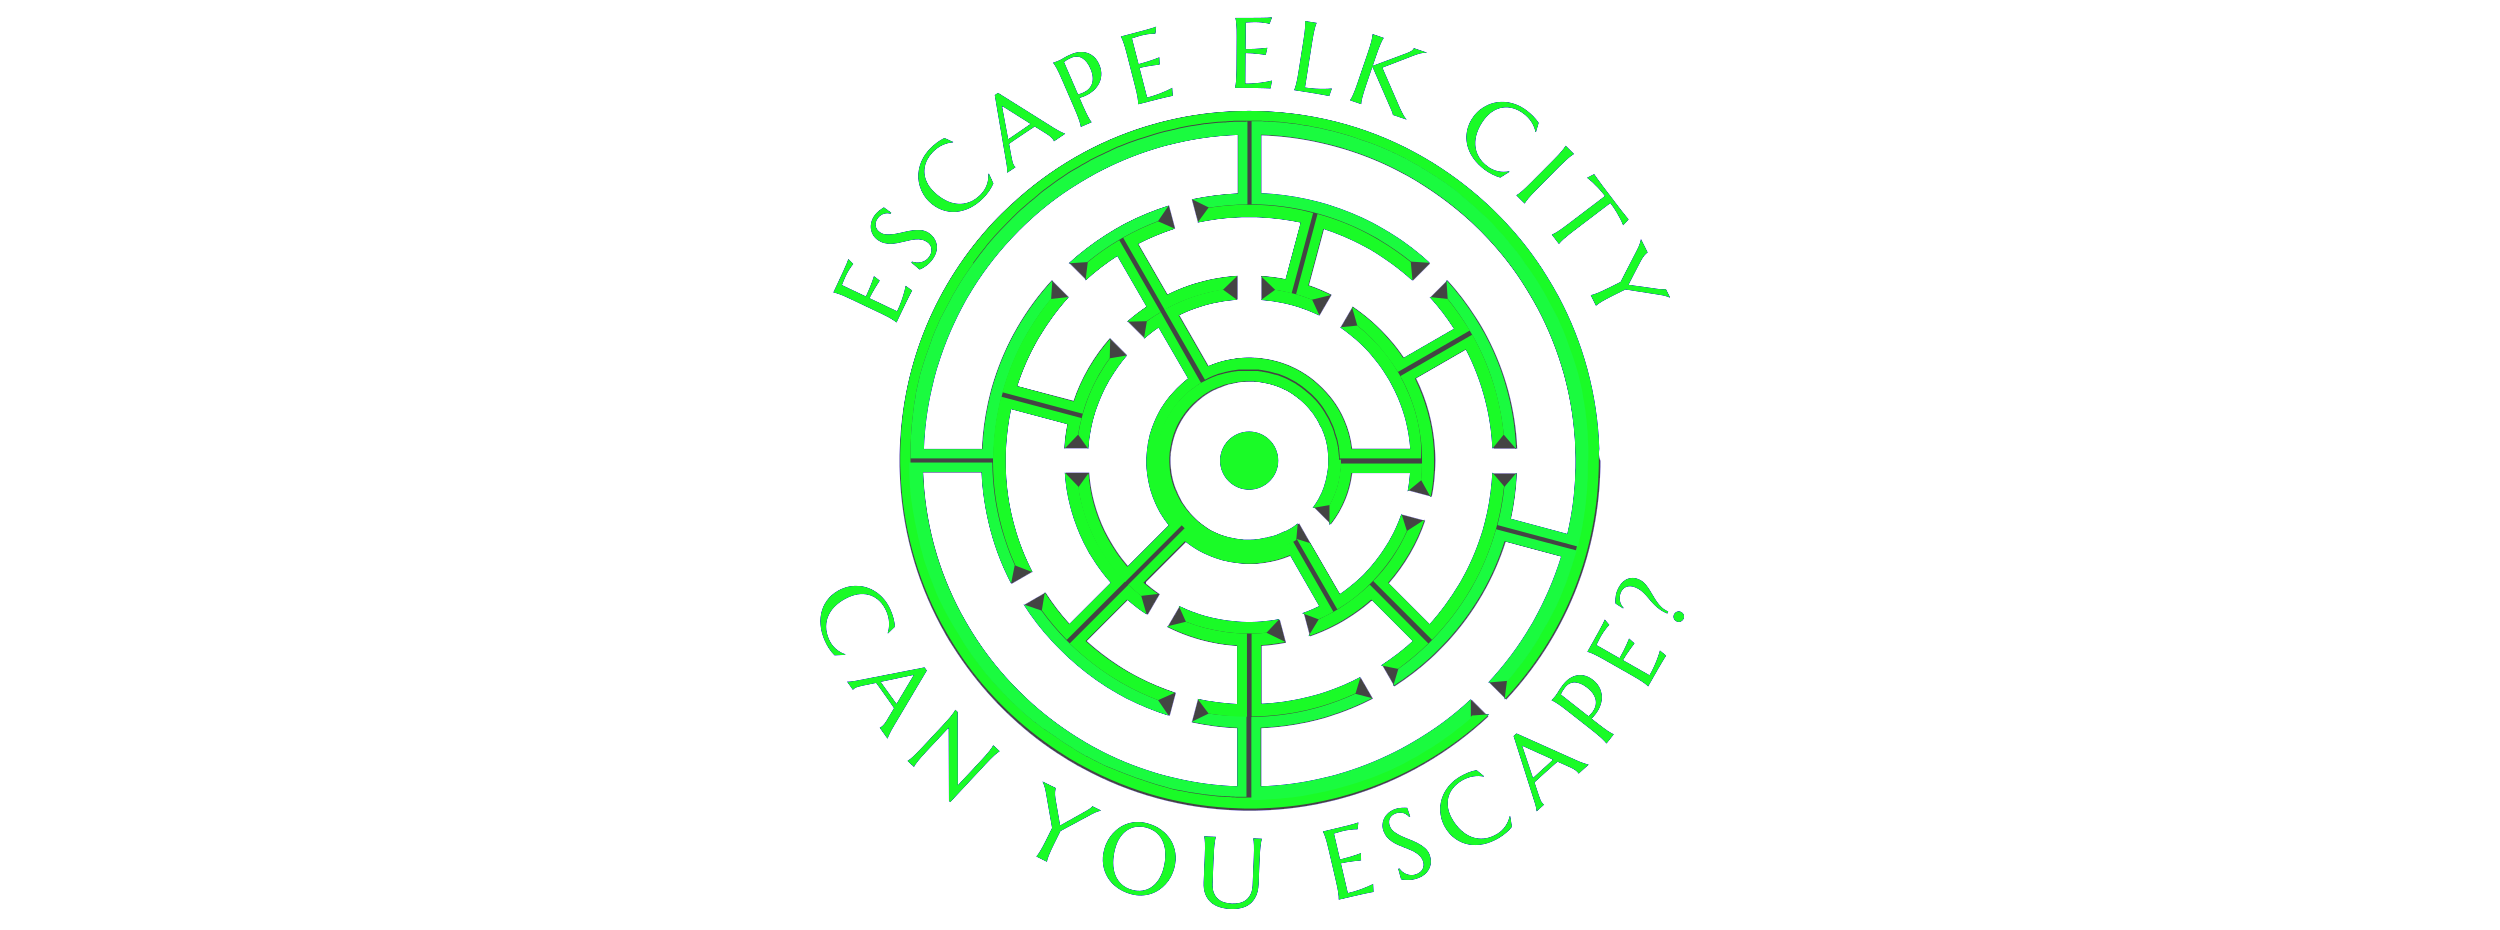 Escape Elk City